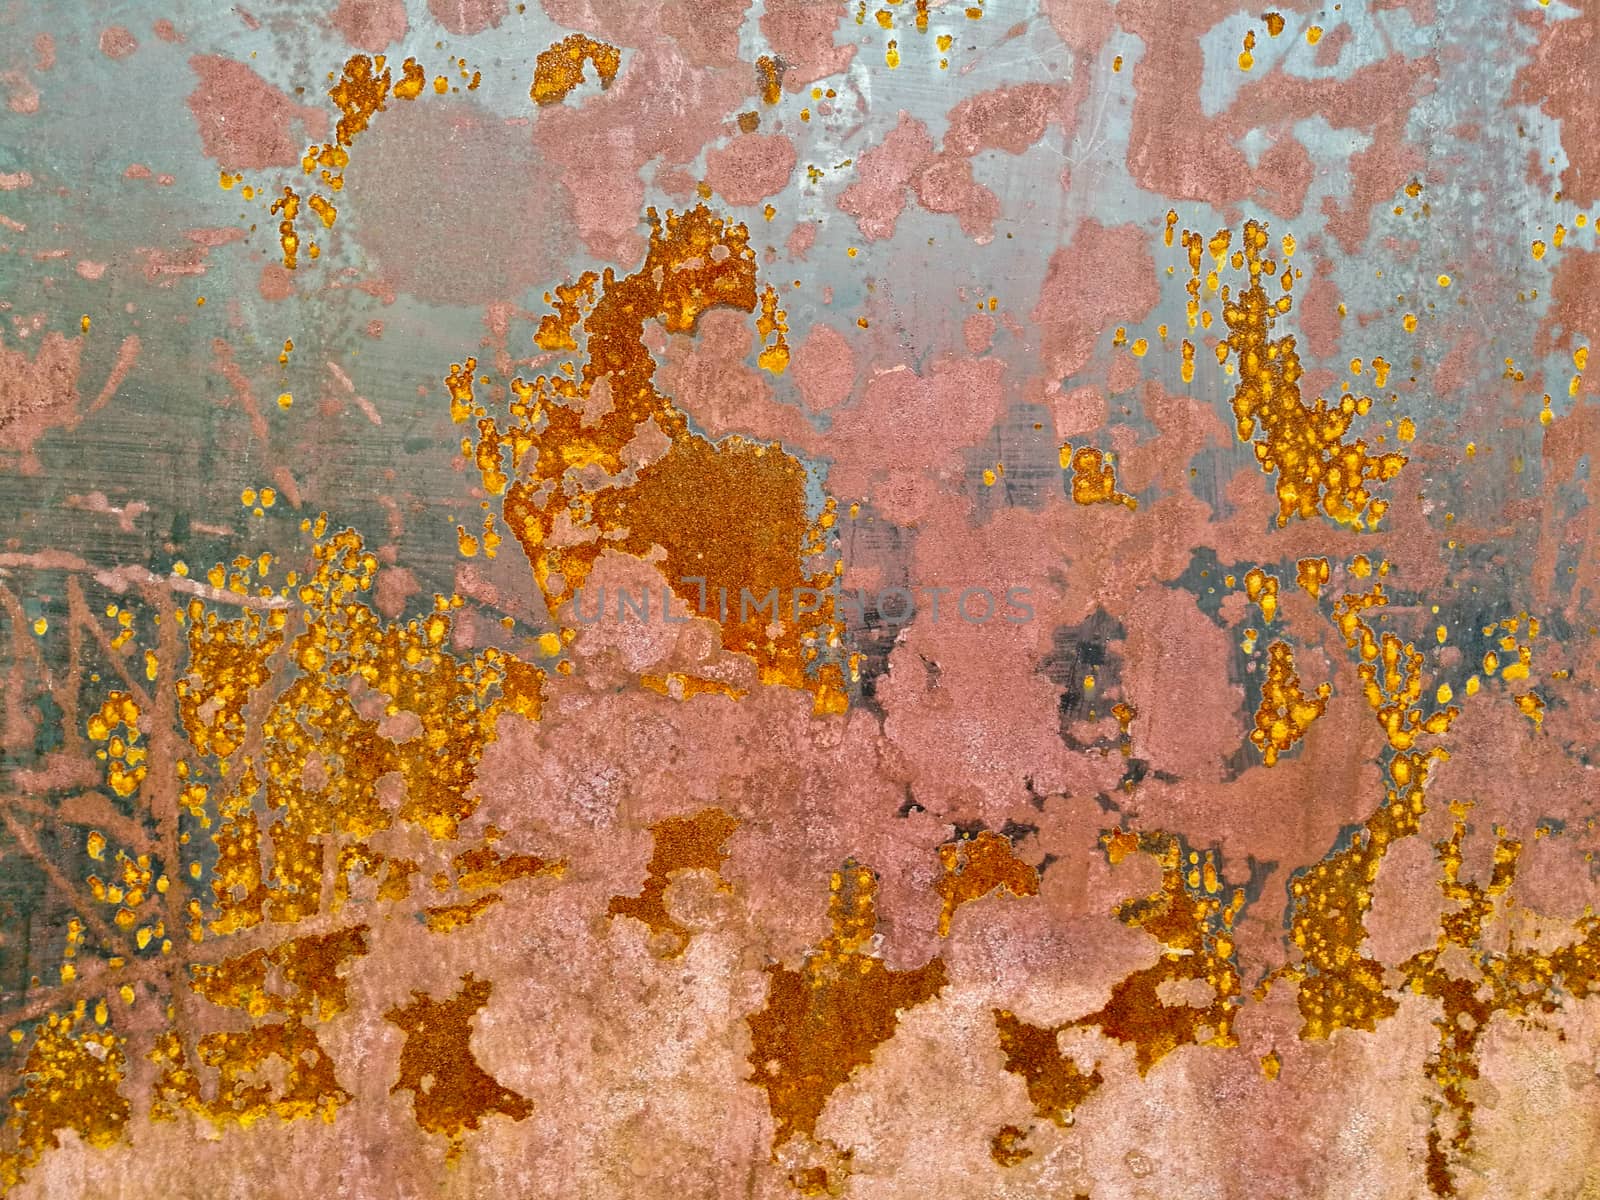 Rustic stain yellow orange red metal sheet industrial background by eyeofpaul